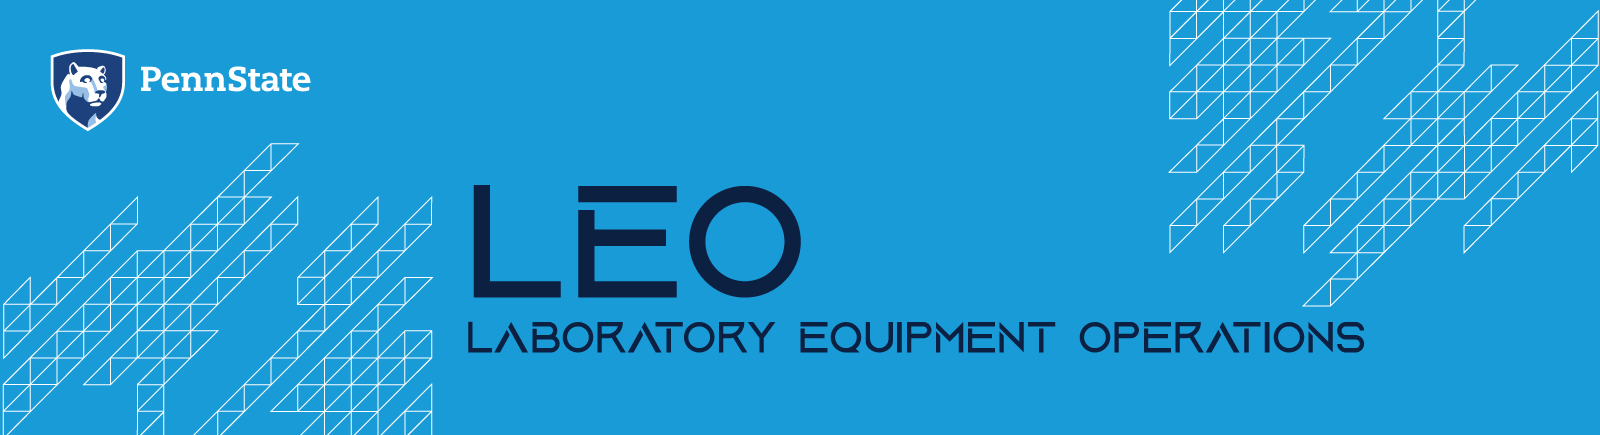 LEO Laboratory Equipment Operations Header